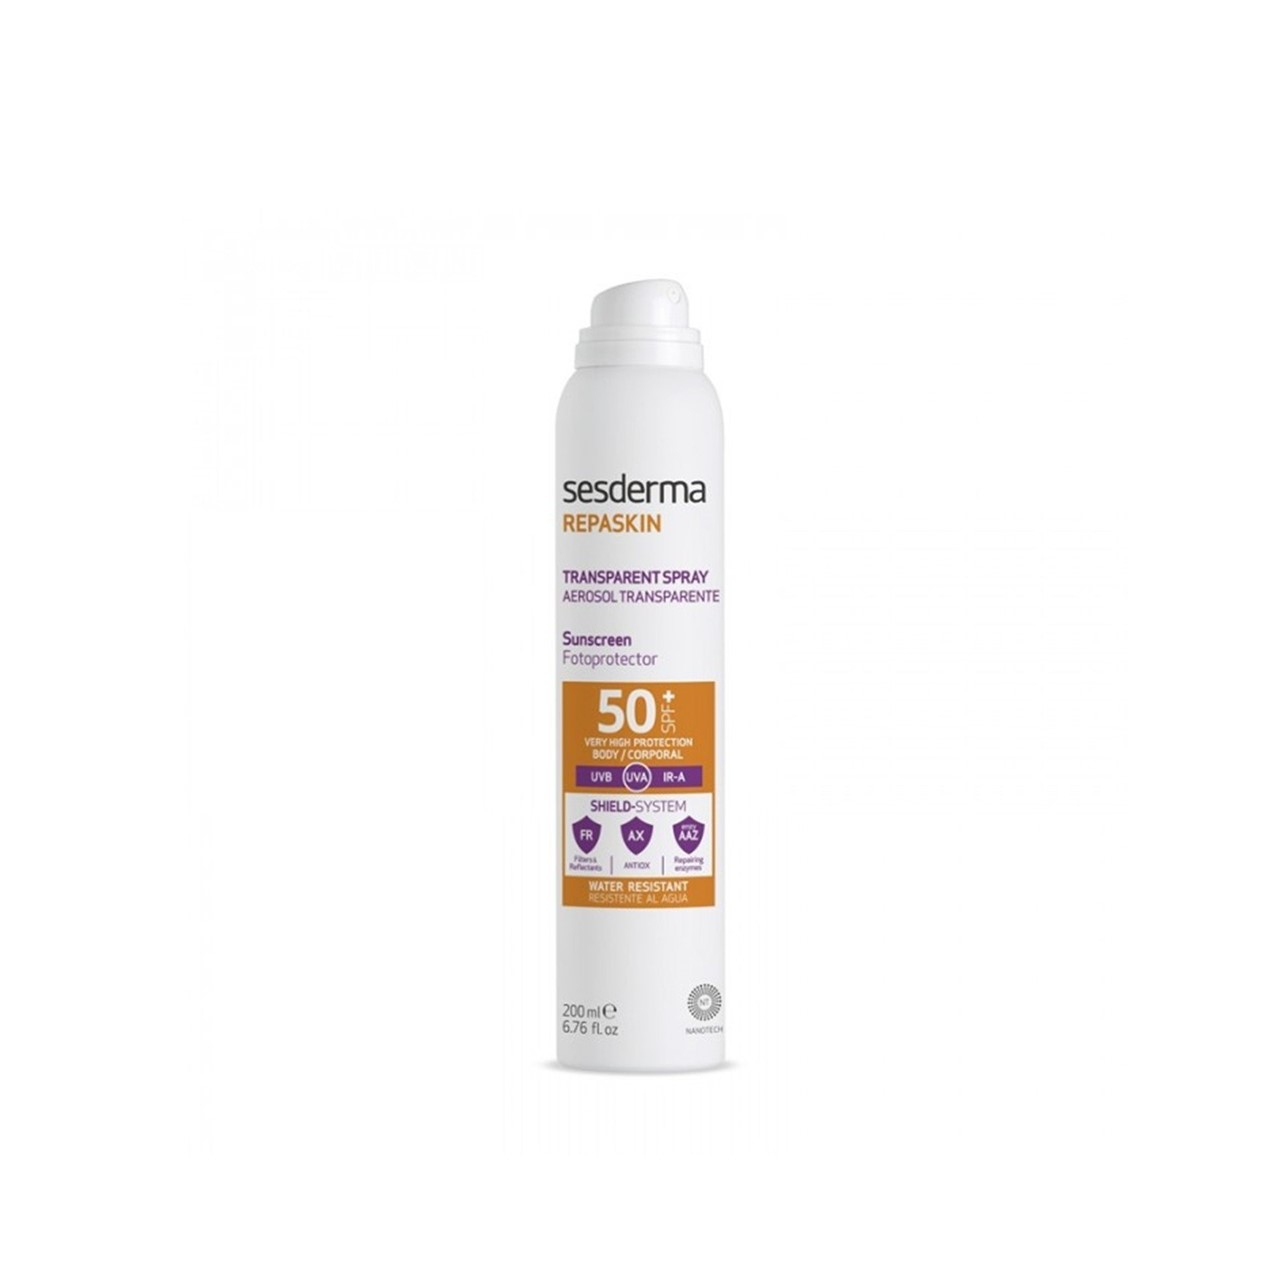 Sesderma Repaskin Transparent Spray SPF50+ 200ml (6.76fl oz)